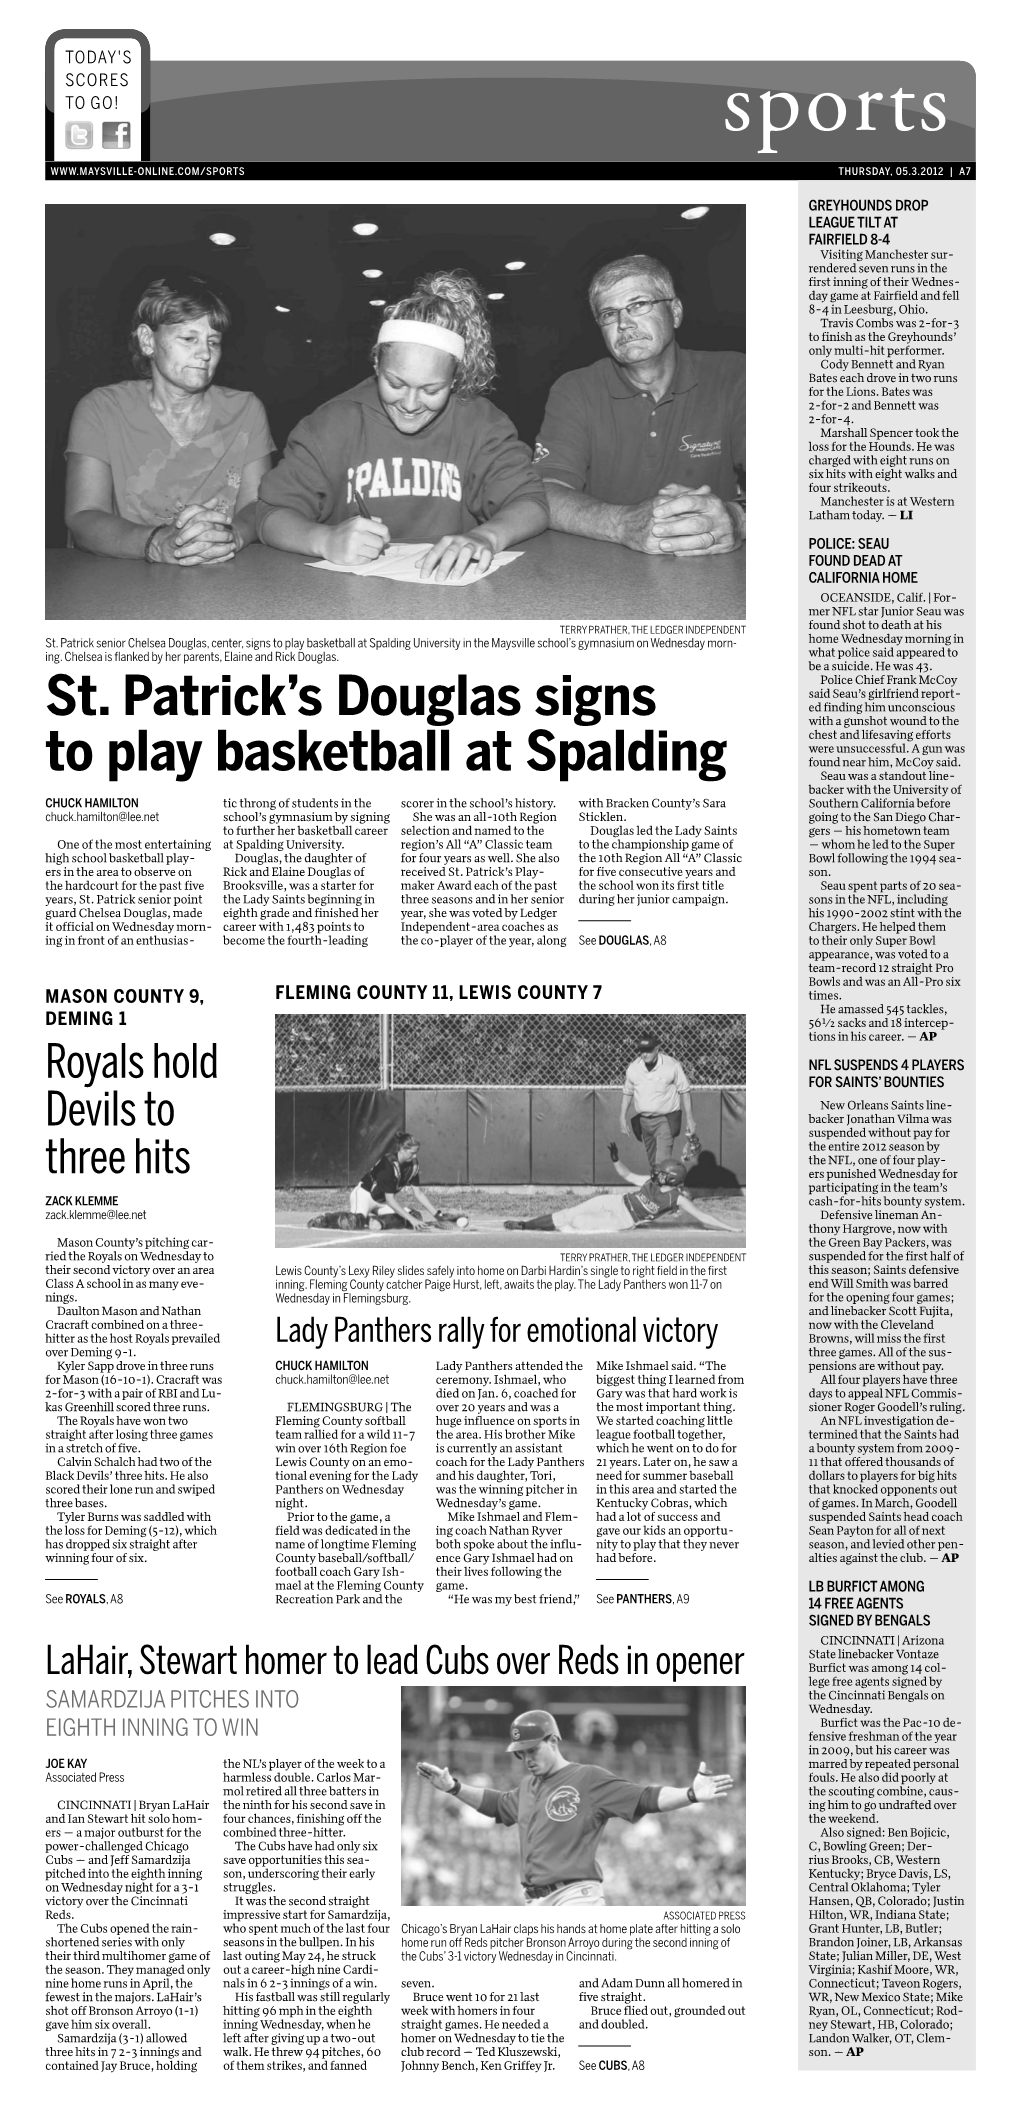 St. Patrick's Douglas Signs to Play Basketball at Spalding